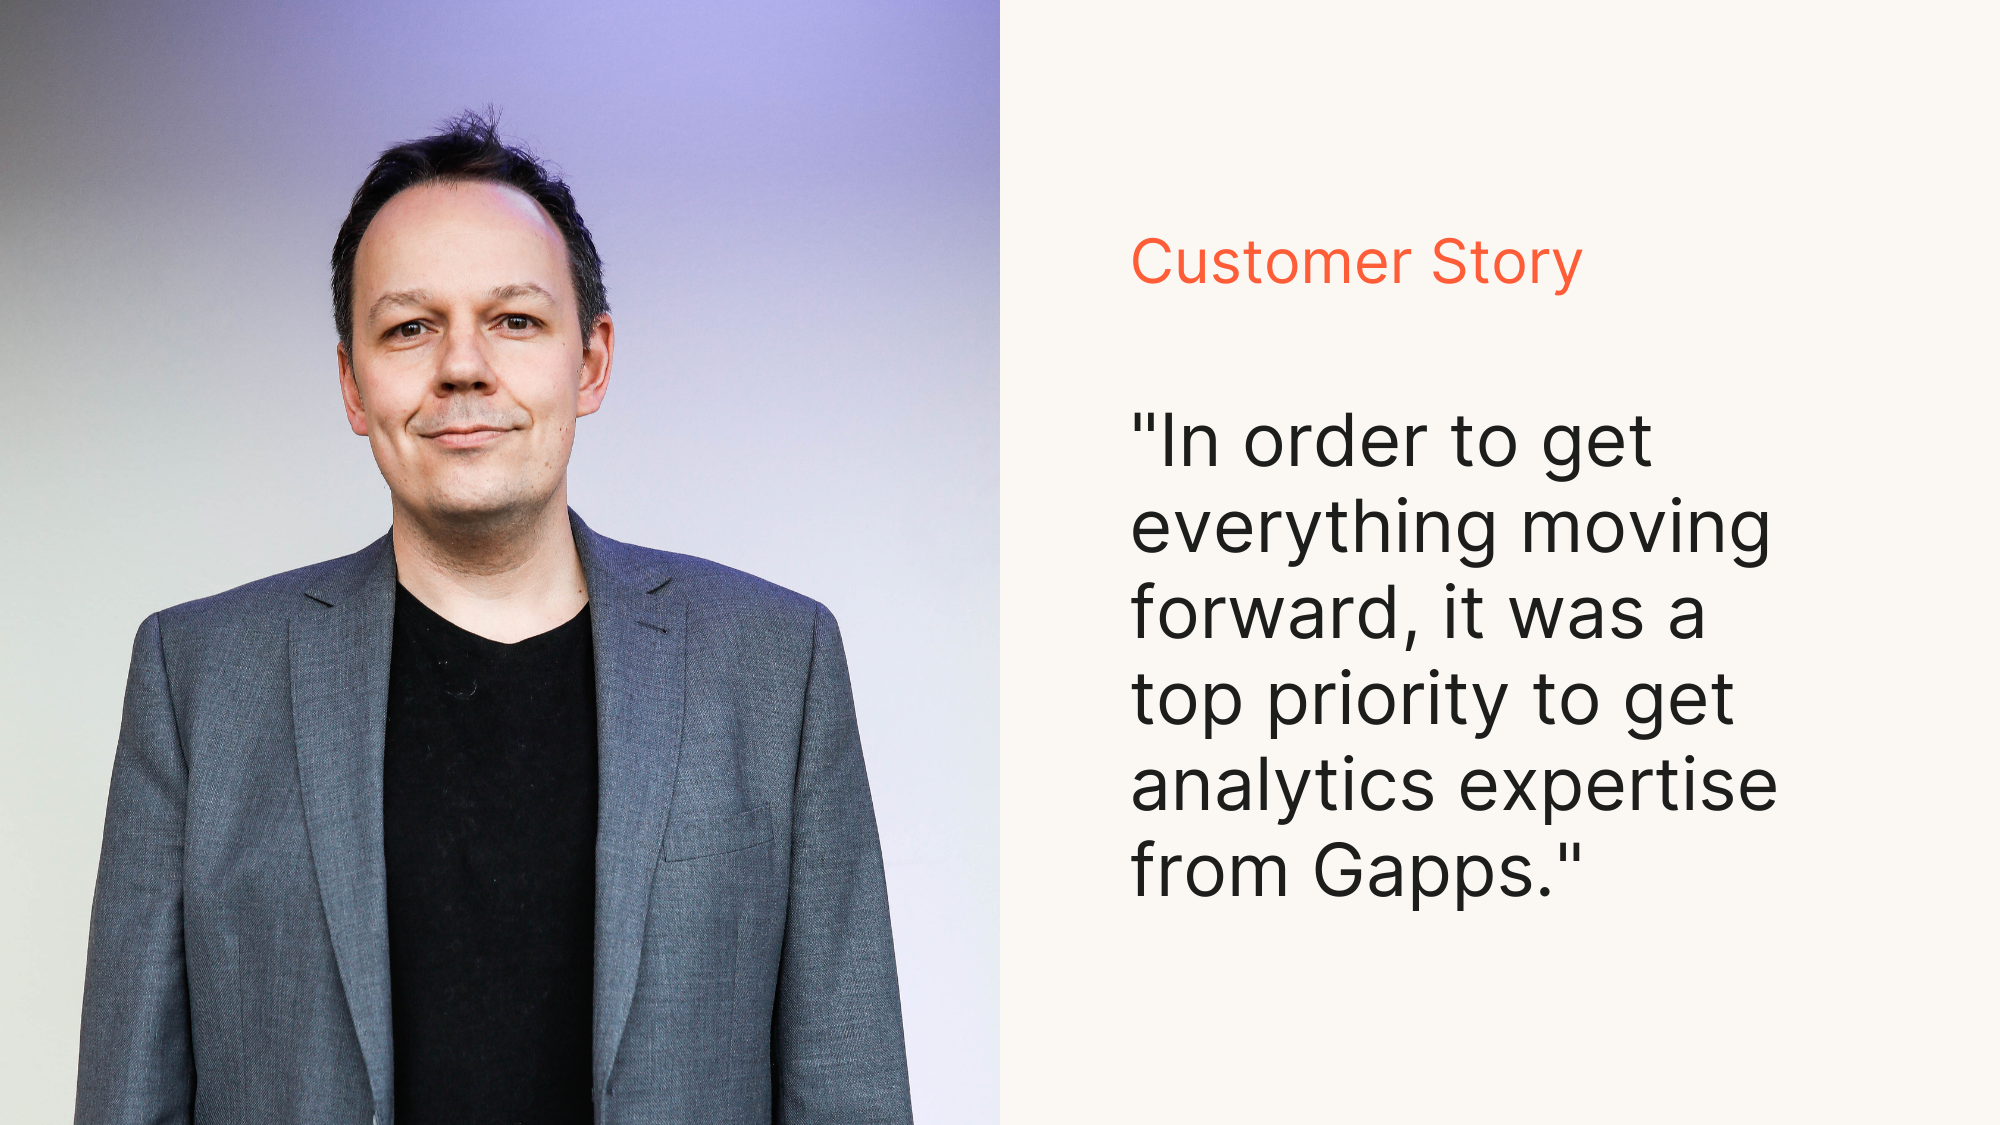 Gapps renewed BHG Group Finland’s marketing data warehouse